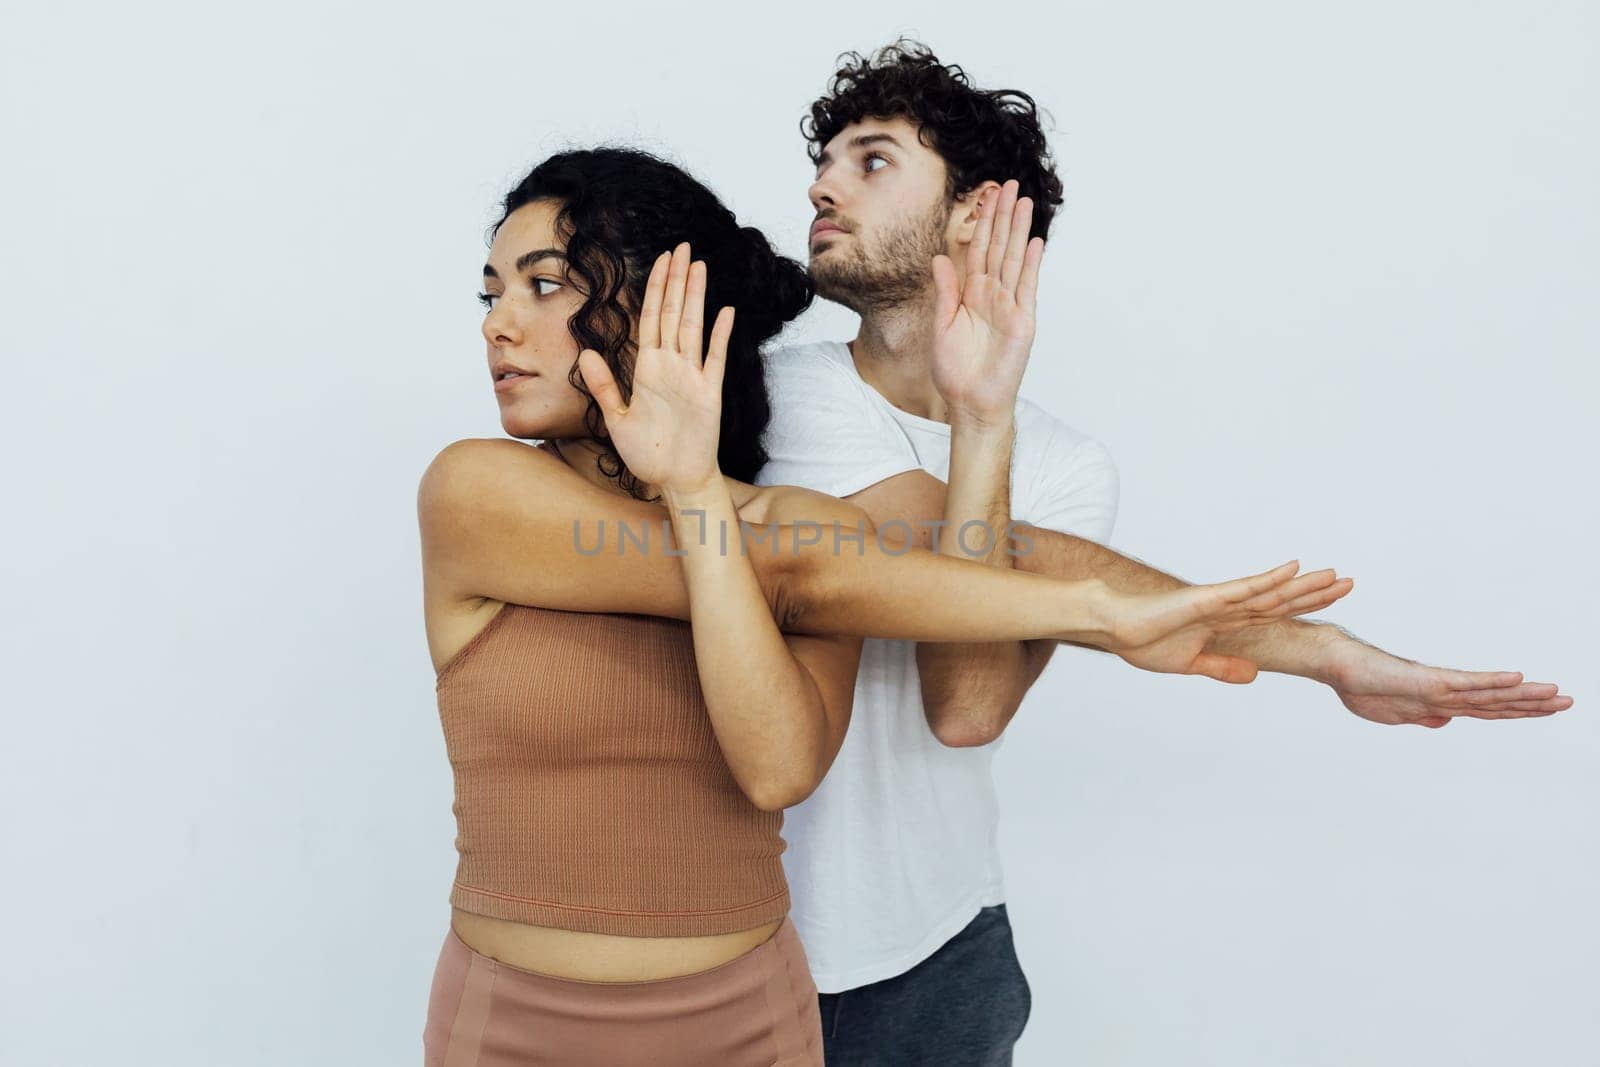 a flexible body acrobatics yoga poses woman and man do gymnastics warm-up exercises stretching